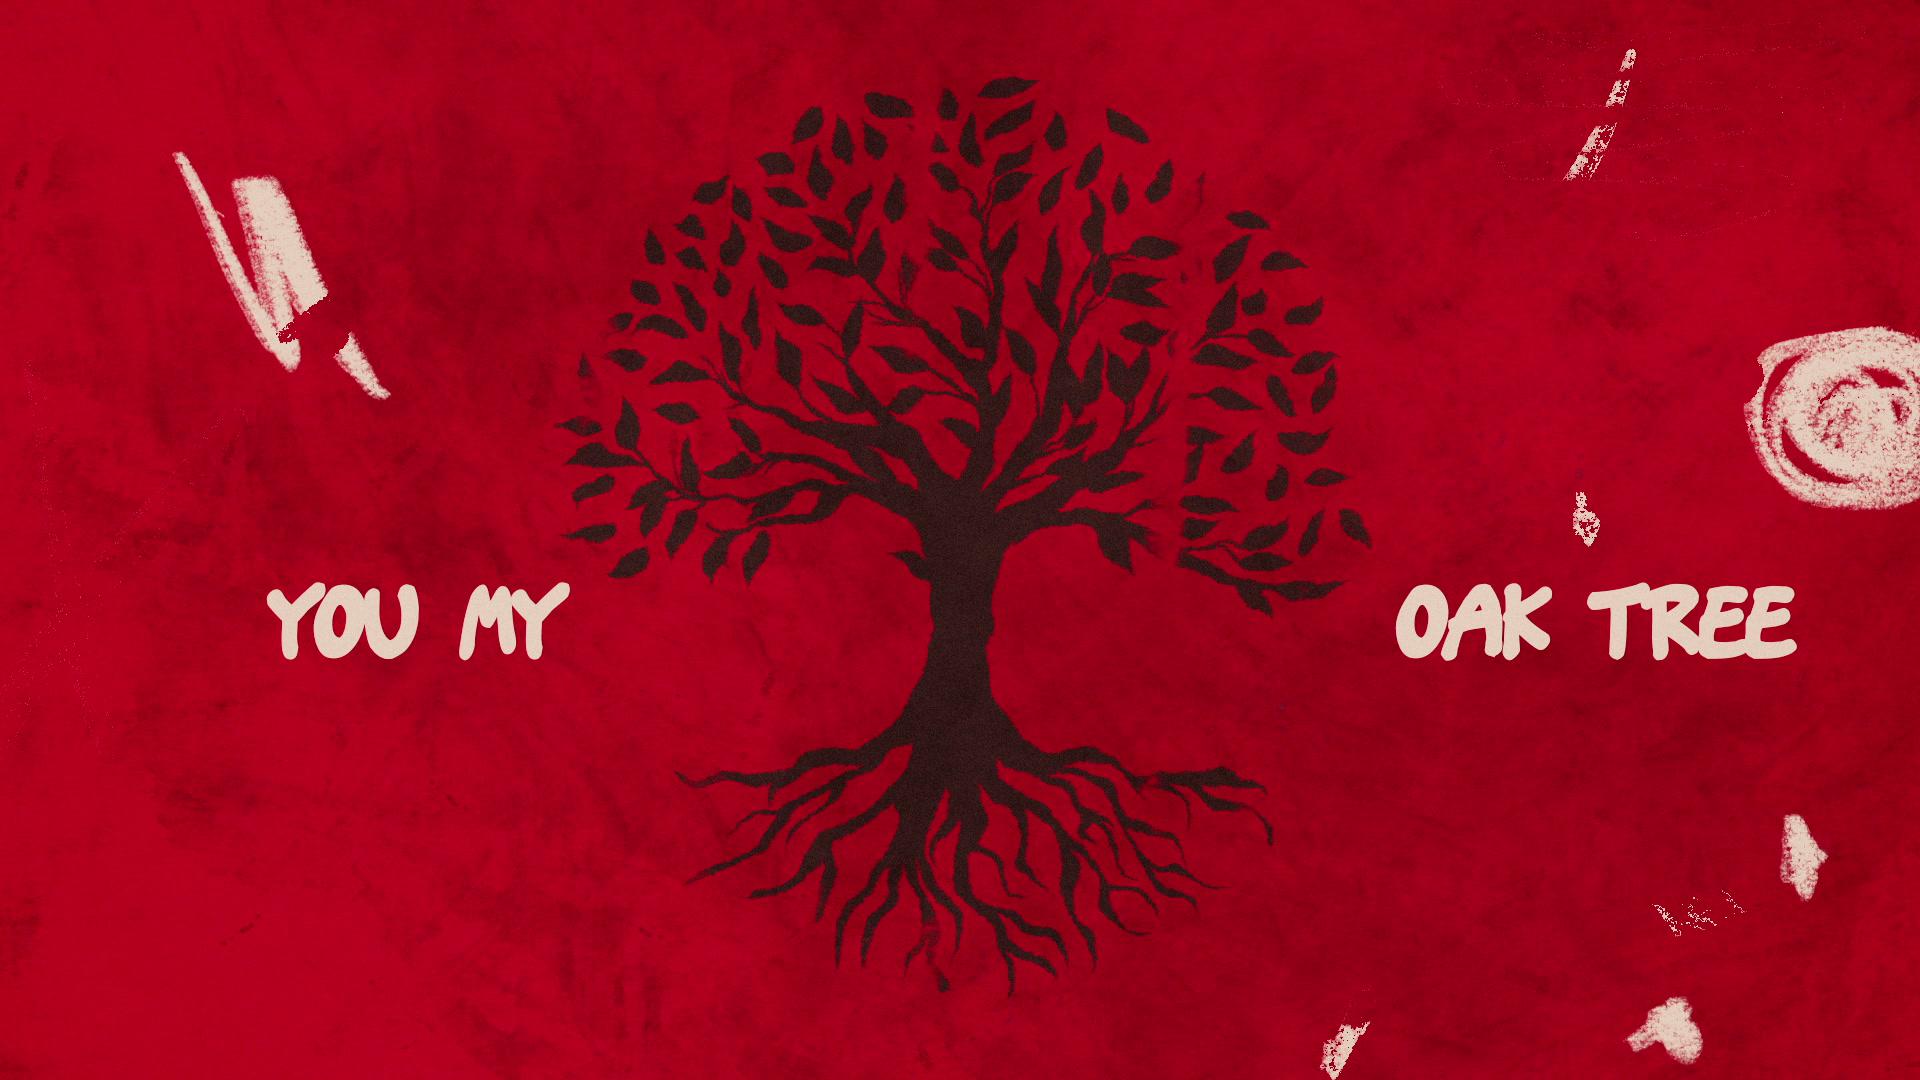 Tank and The Bangas - Oak Tree (Lyric Video)